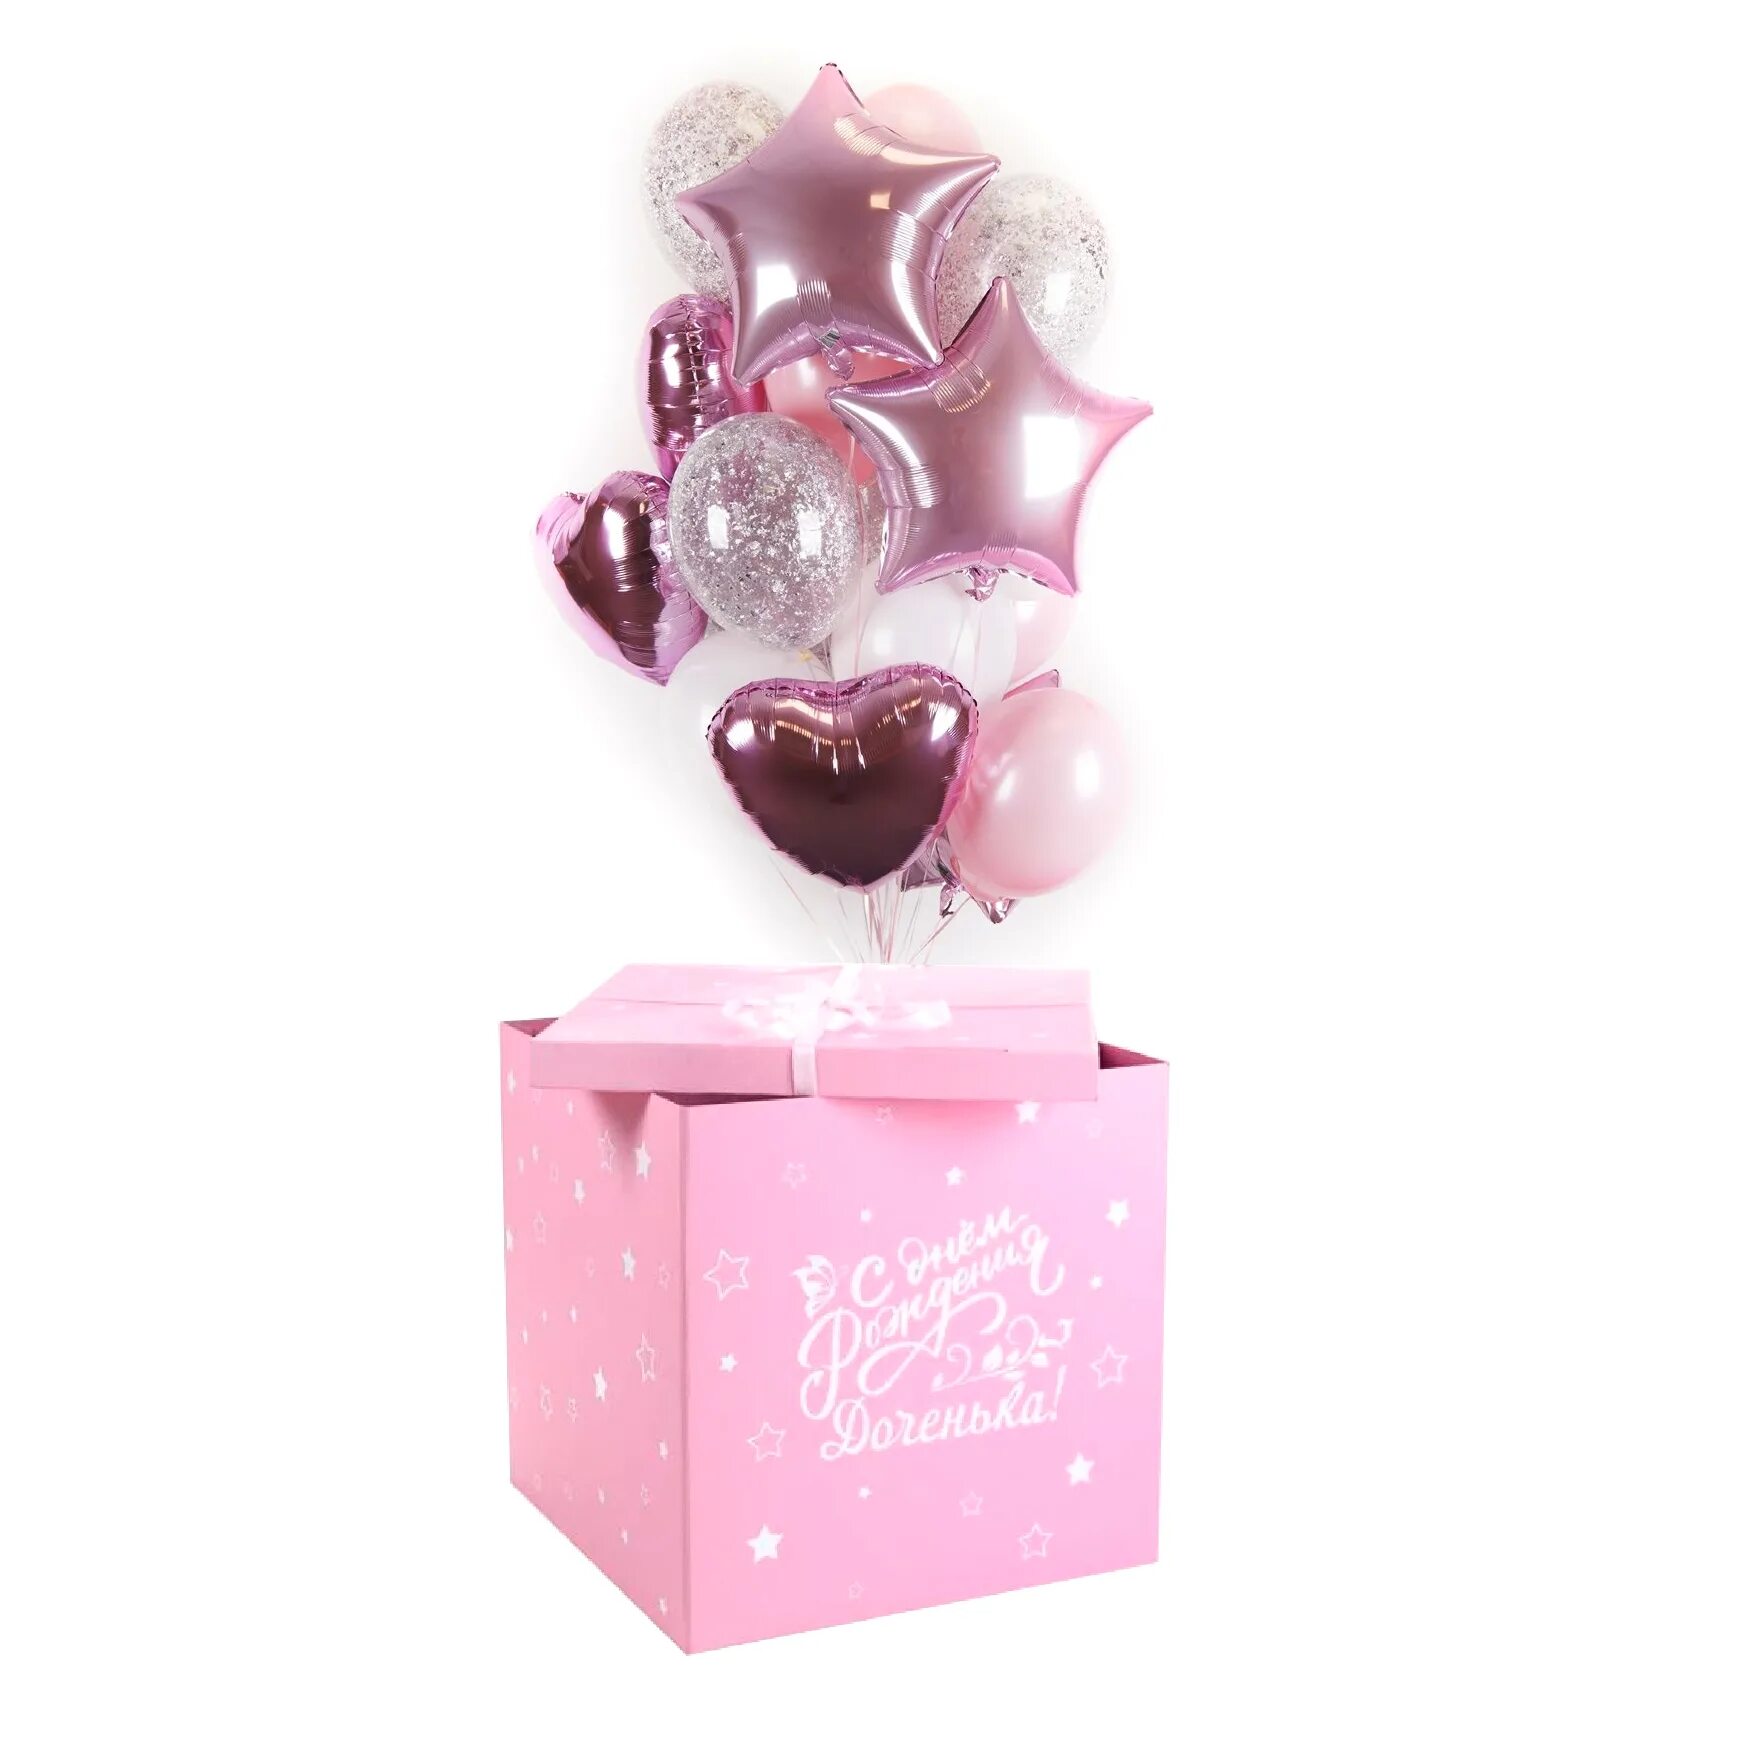 Коробка с шарами сюрприз. Коробка с шарами. Коробка с шарами для девочки. Коробка сюрприз с шарами для девочки. Розовая коробка сюрприз с шарами.